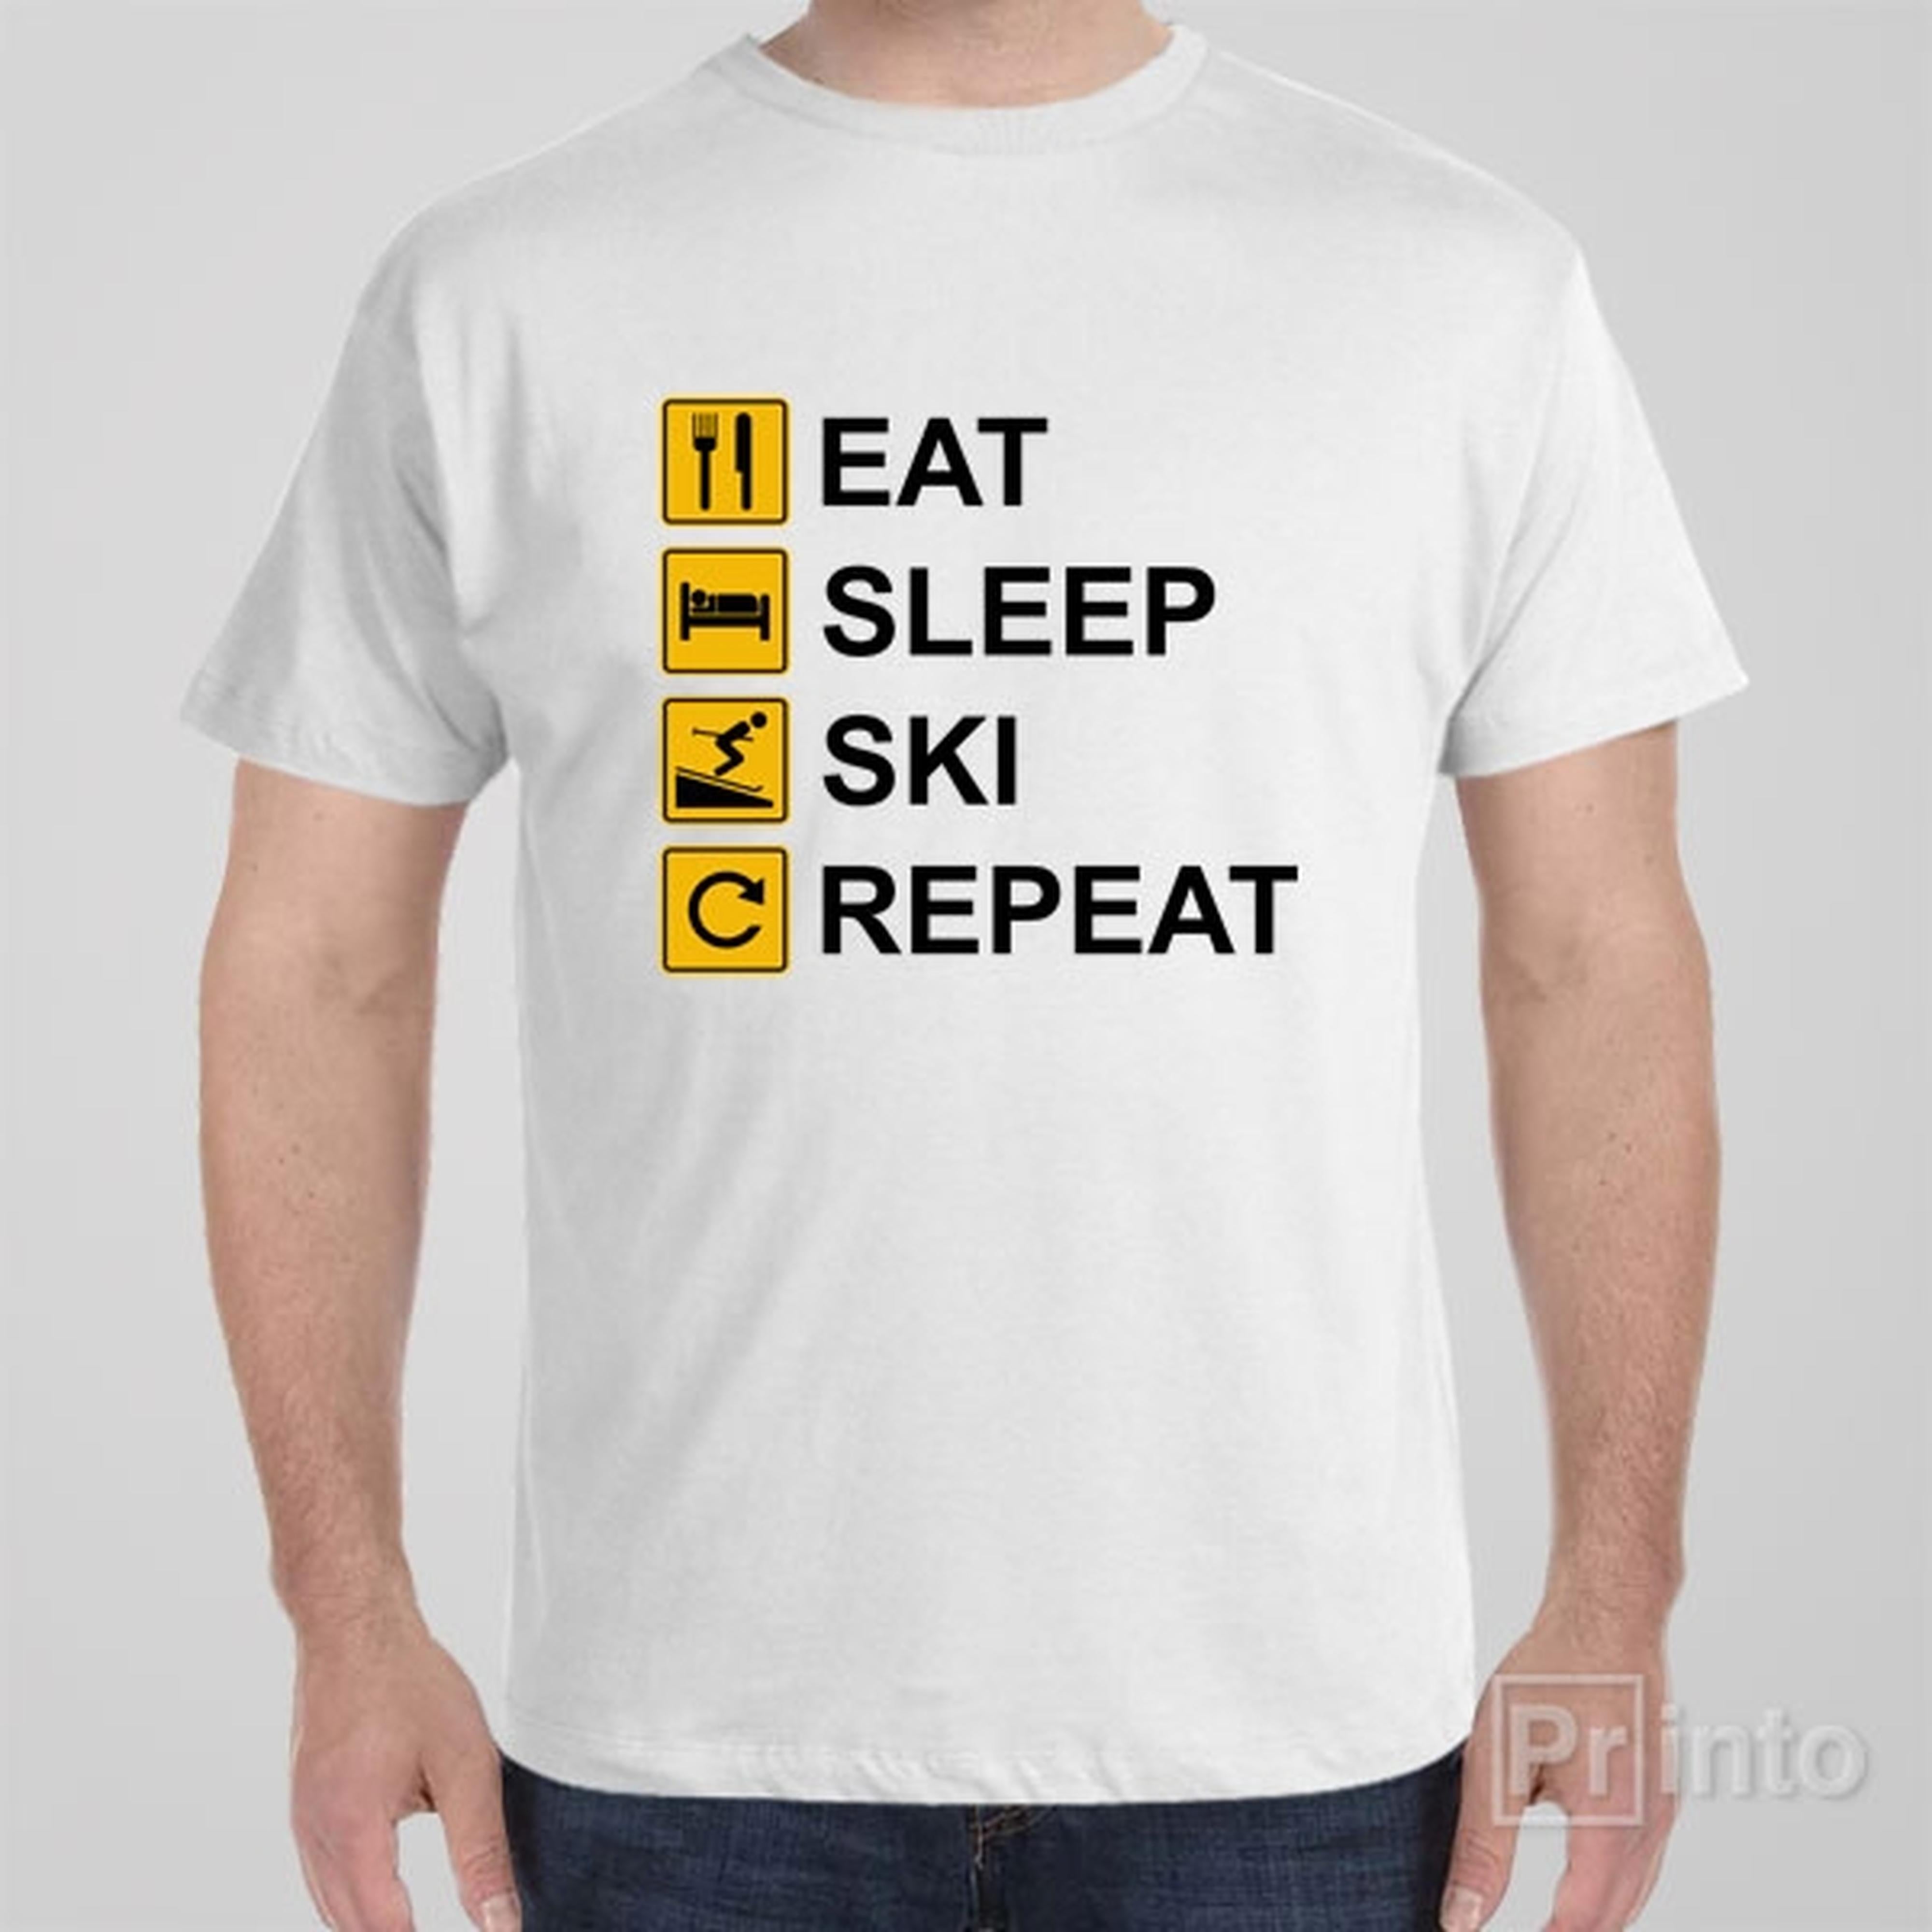 eat-sleep-ski-repeat-t-shirt